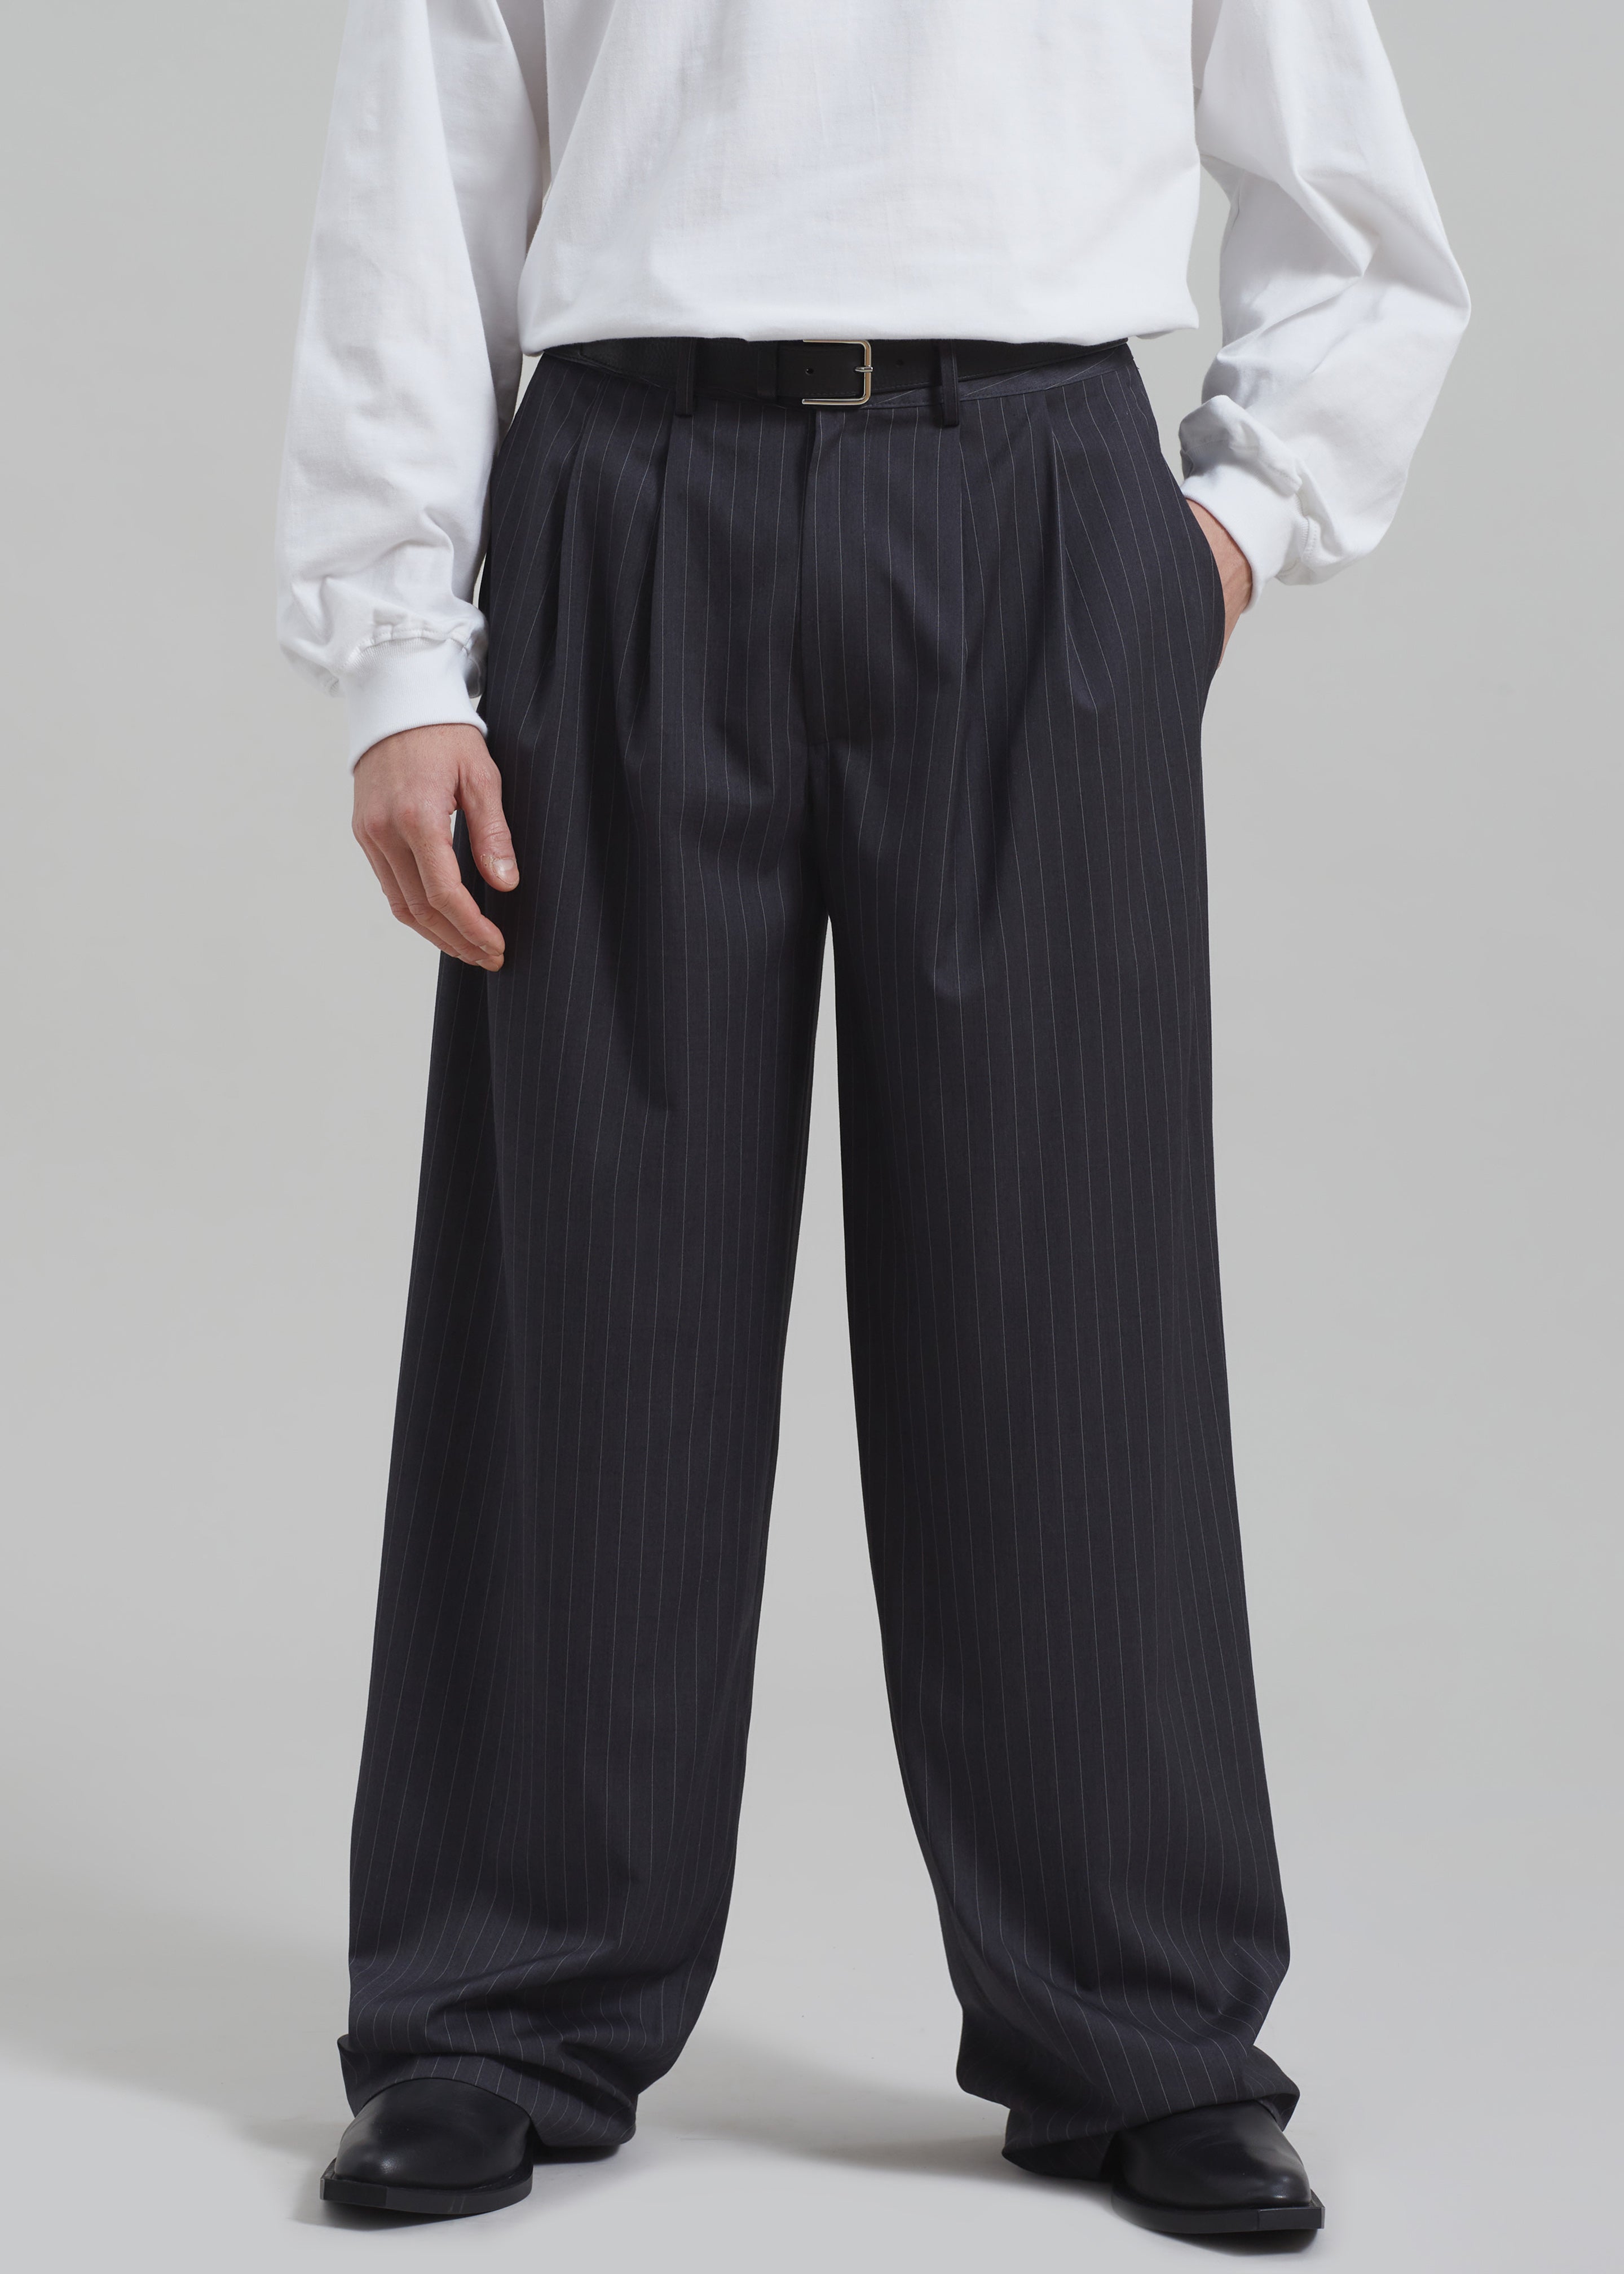 Peyton Pleated Pants - Grey Pinstripe - 2